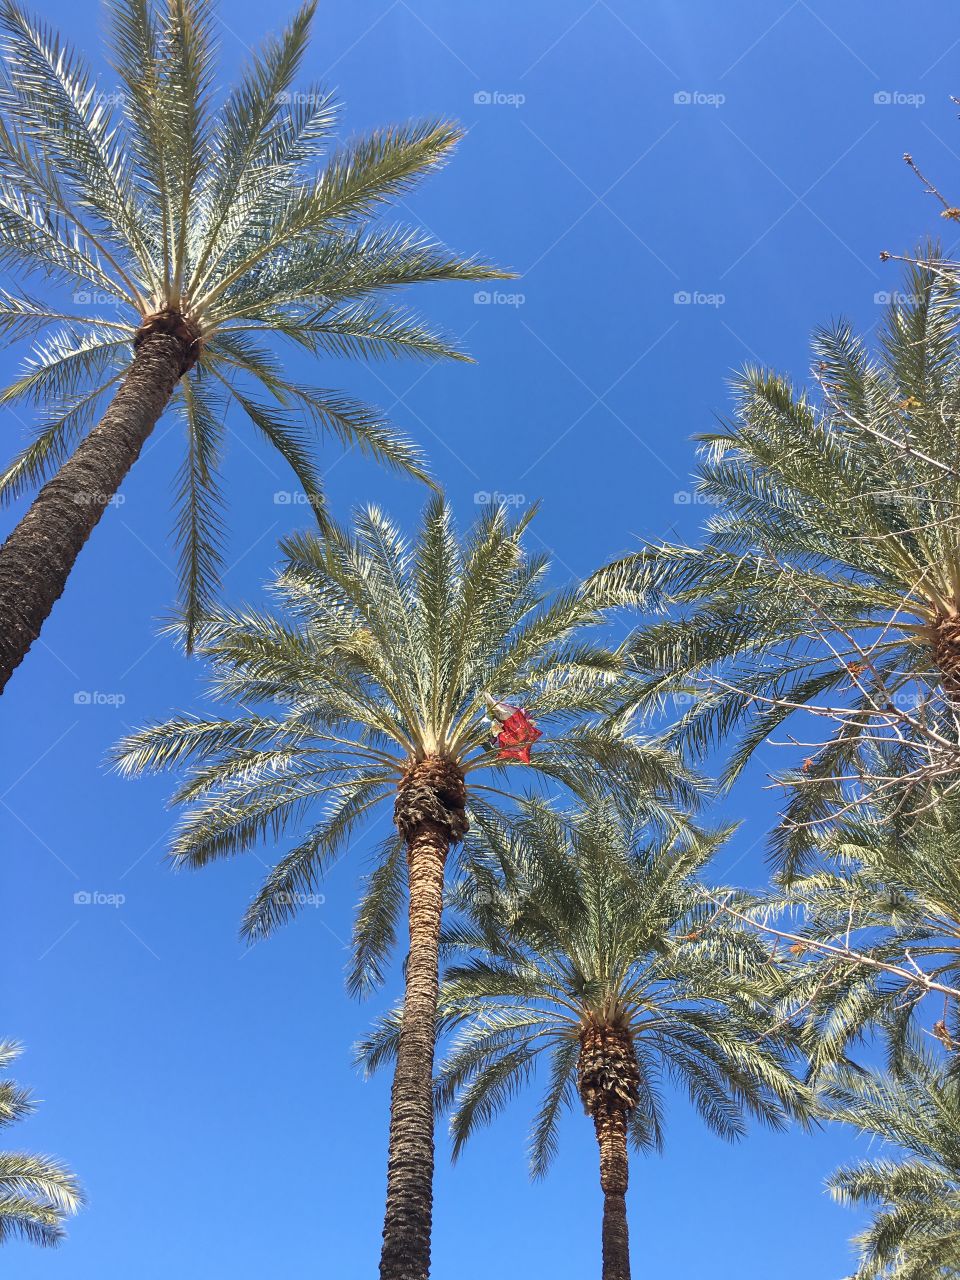 Balloon stuck in Palm tree